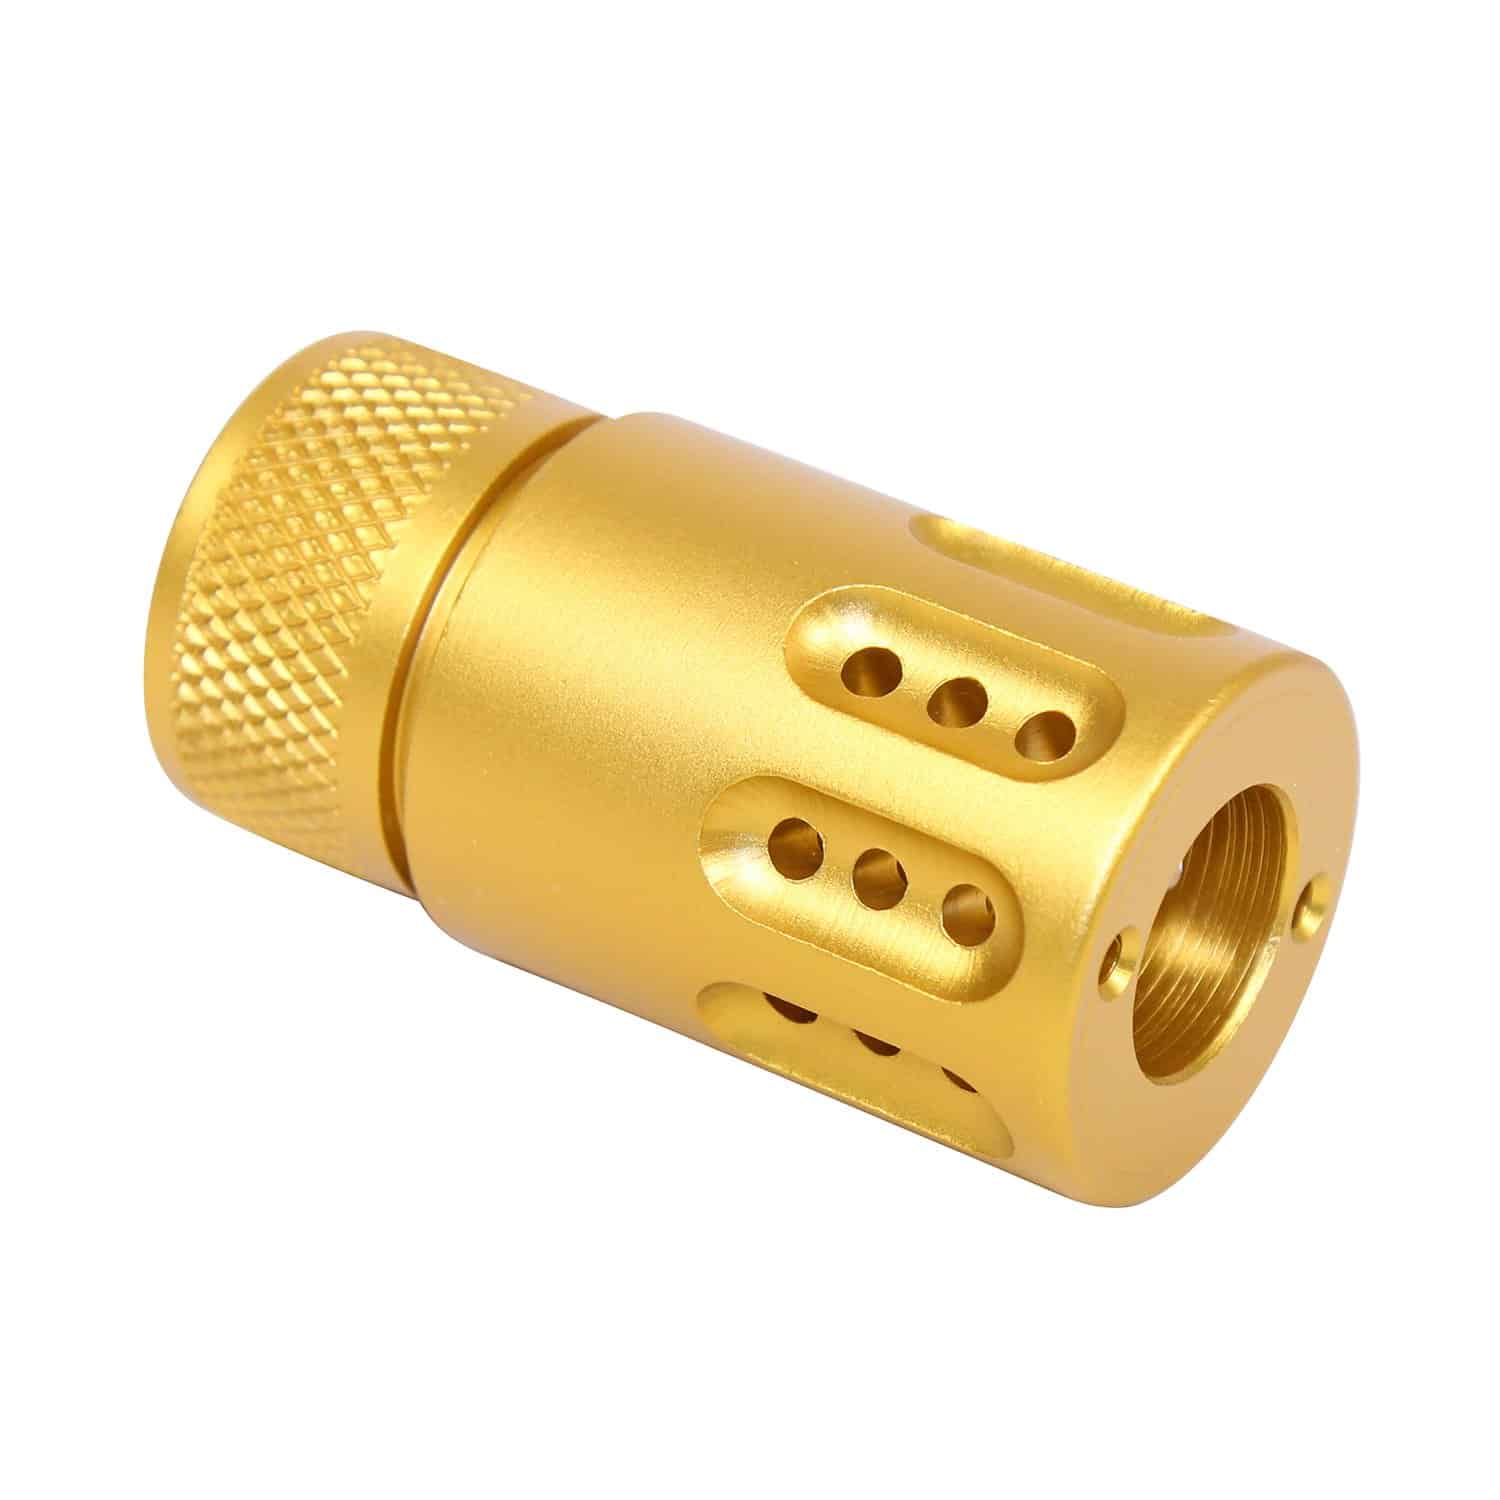 AR .308 caliber mini muzzle brake and shroud in anodized gold